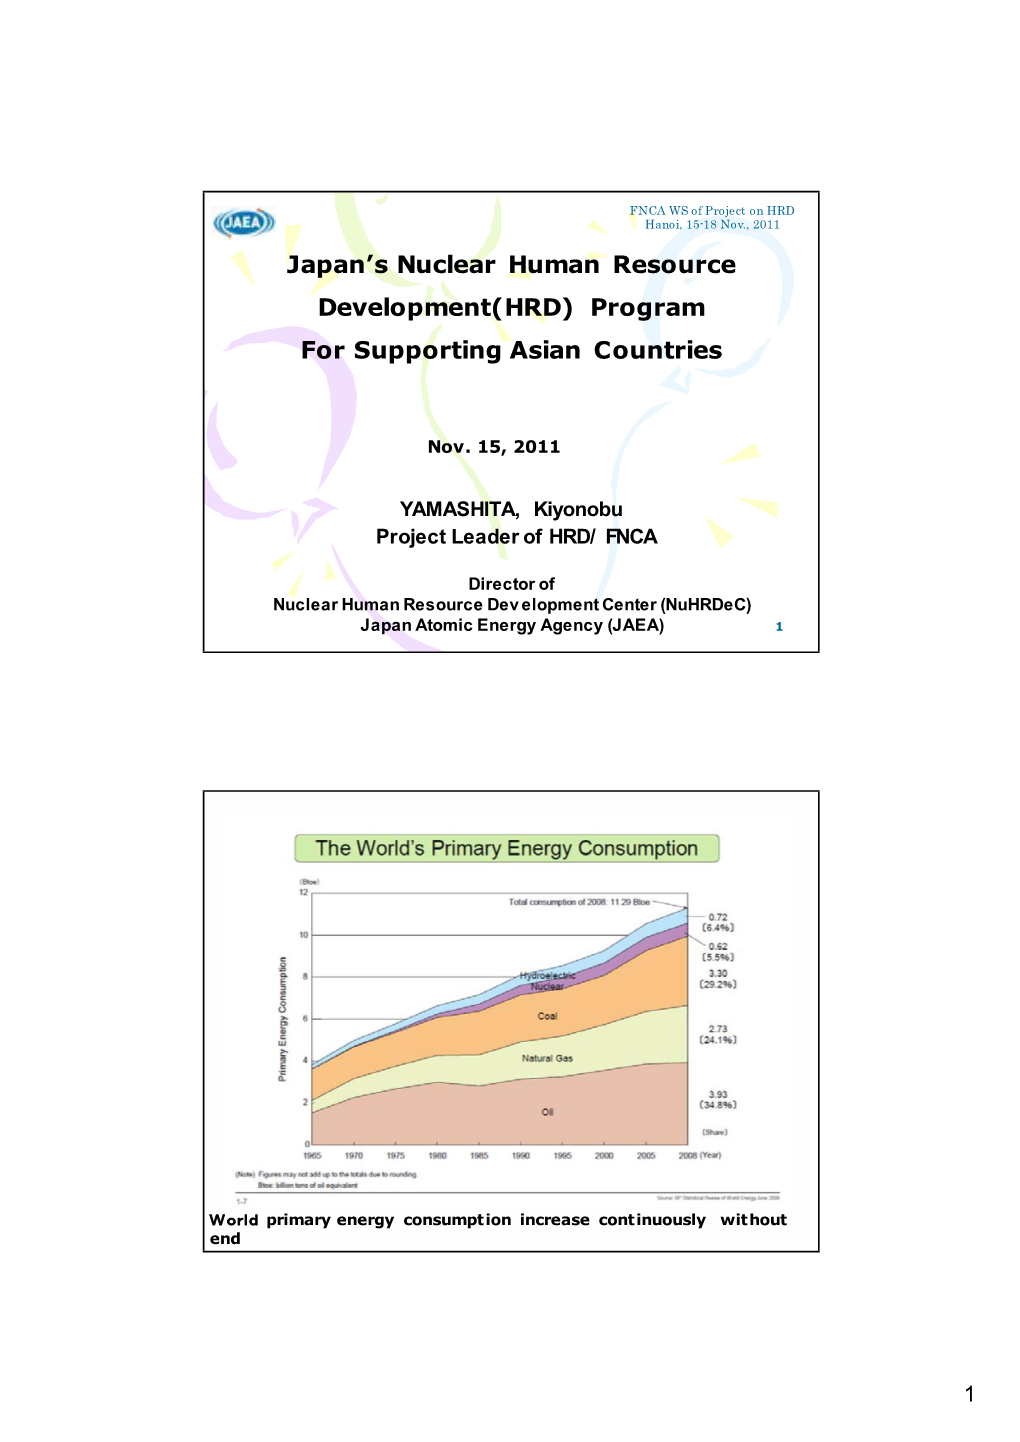 Japan's Nuclear Human Resource Development(HRD) Program For